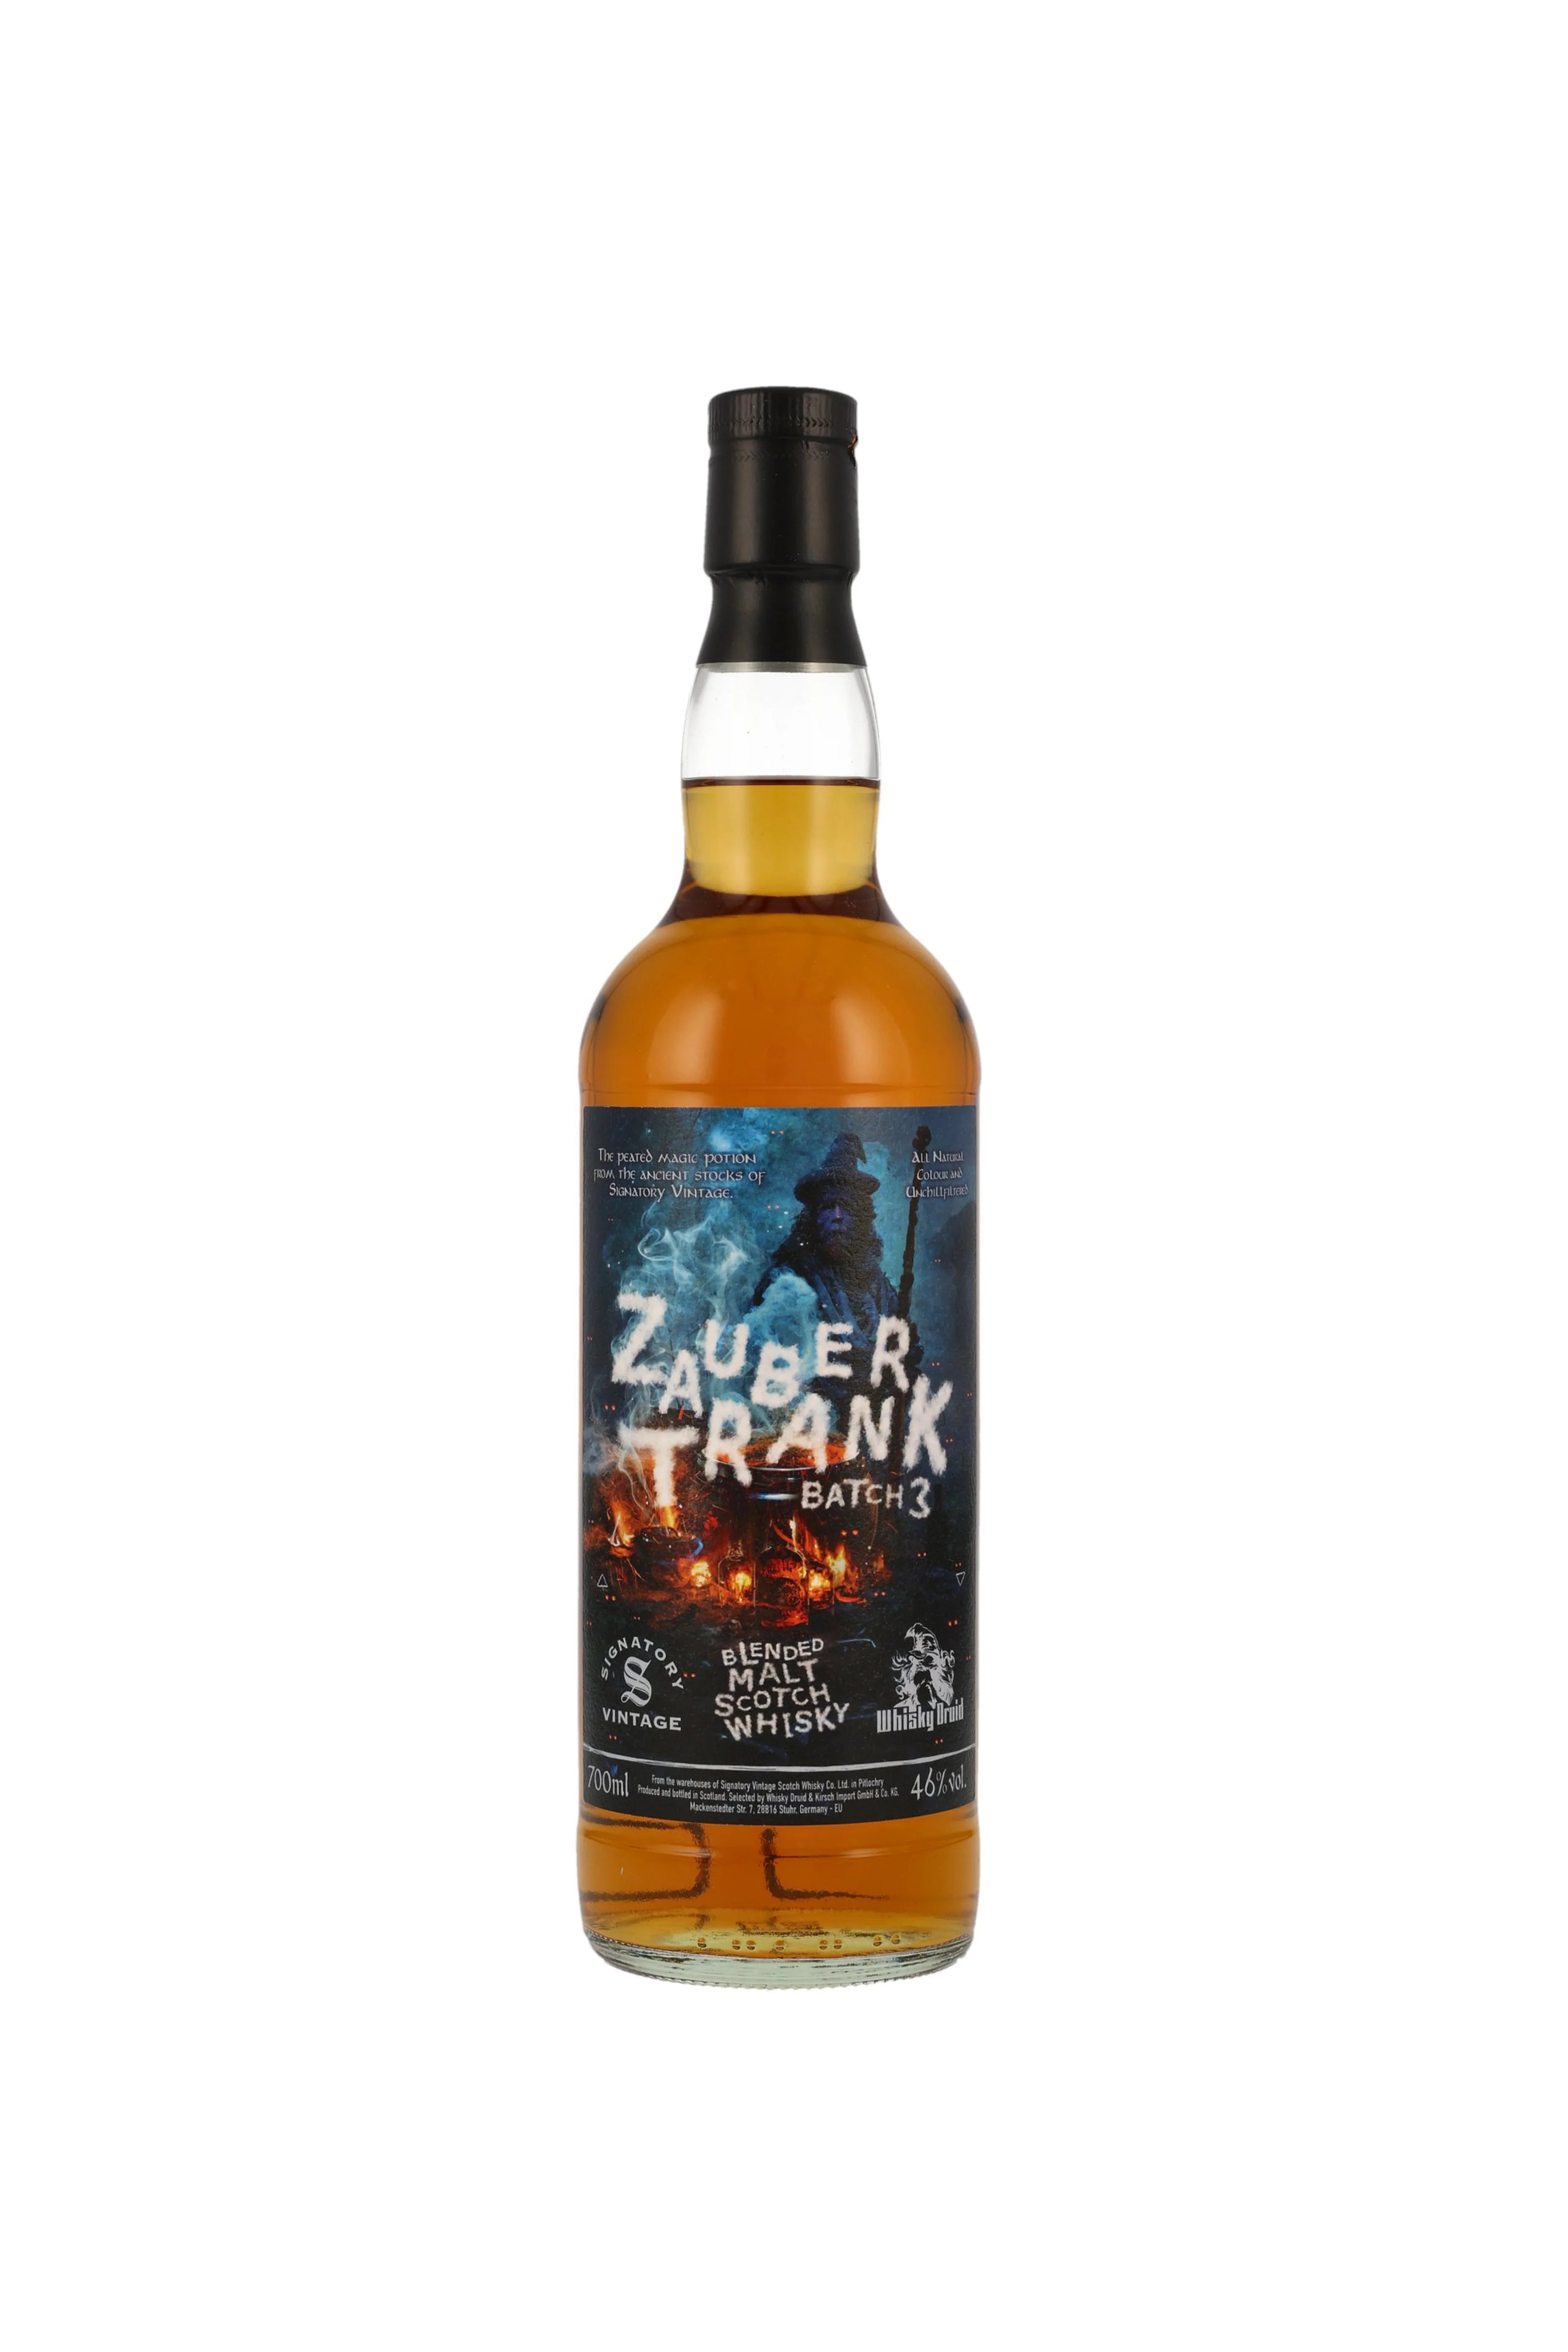 Zaubertrank #3 Whisky Druid Blended Malt Scotch Whisky (Signatory Vintage) 46% vol. 700ml